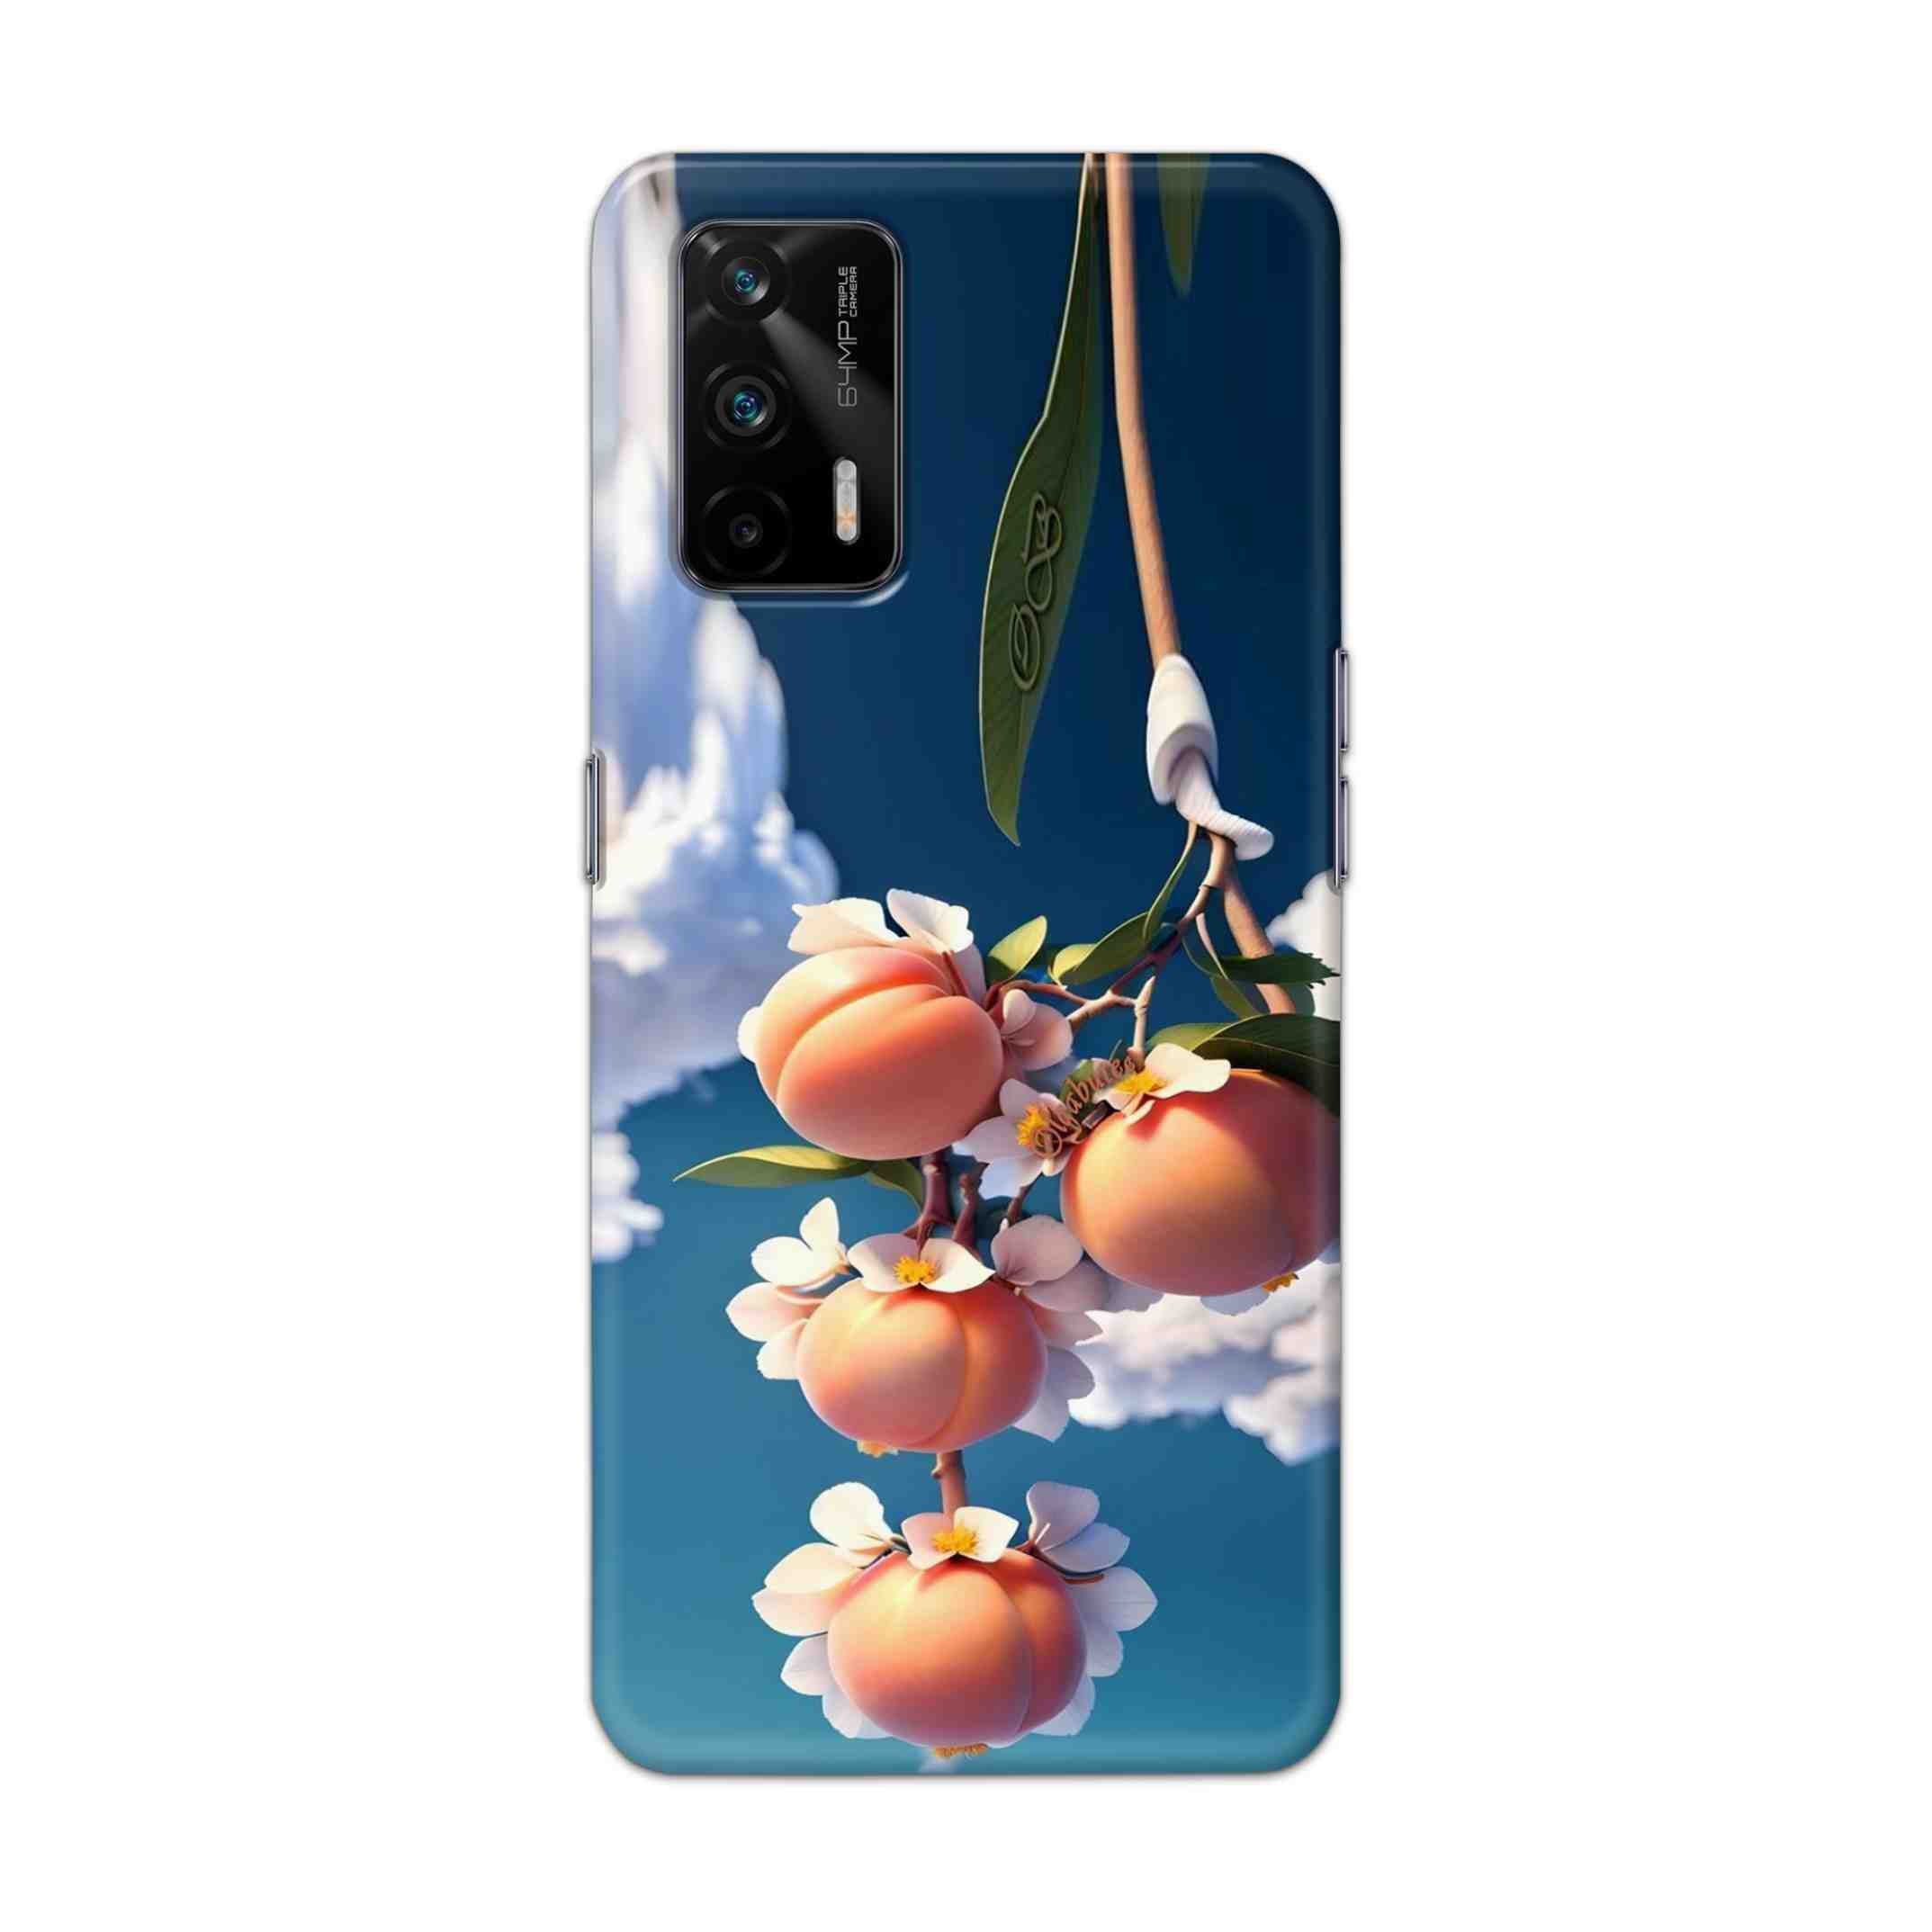 Buy Fruit Hard Back Mobile Phone Case Cover For Realme X7 Max Online